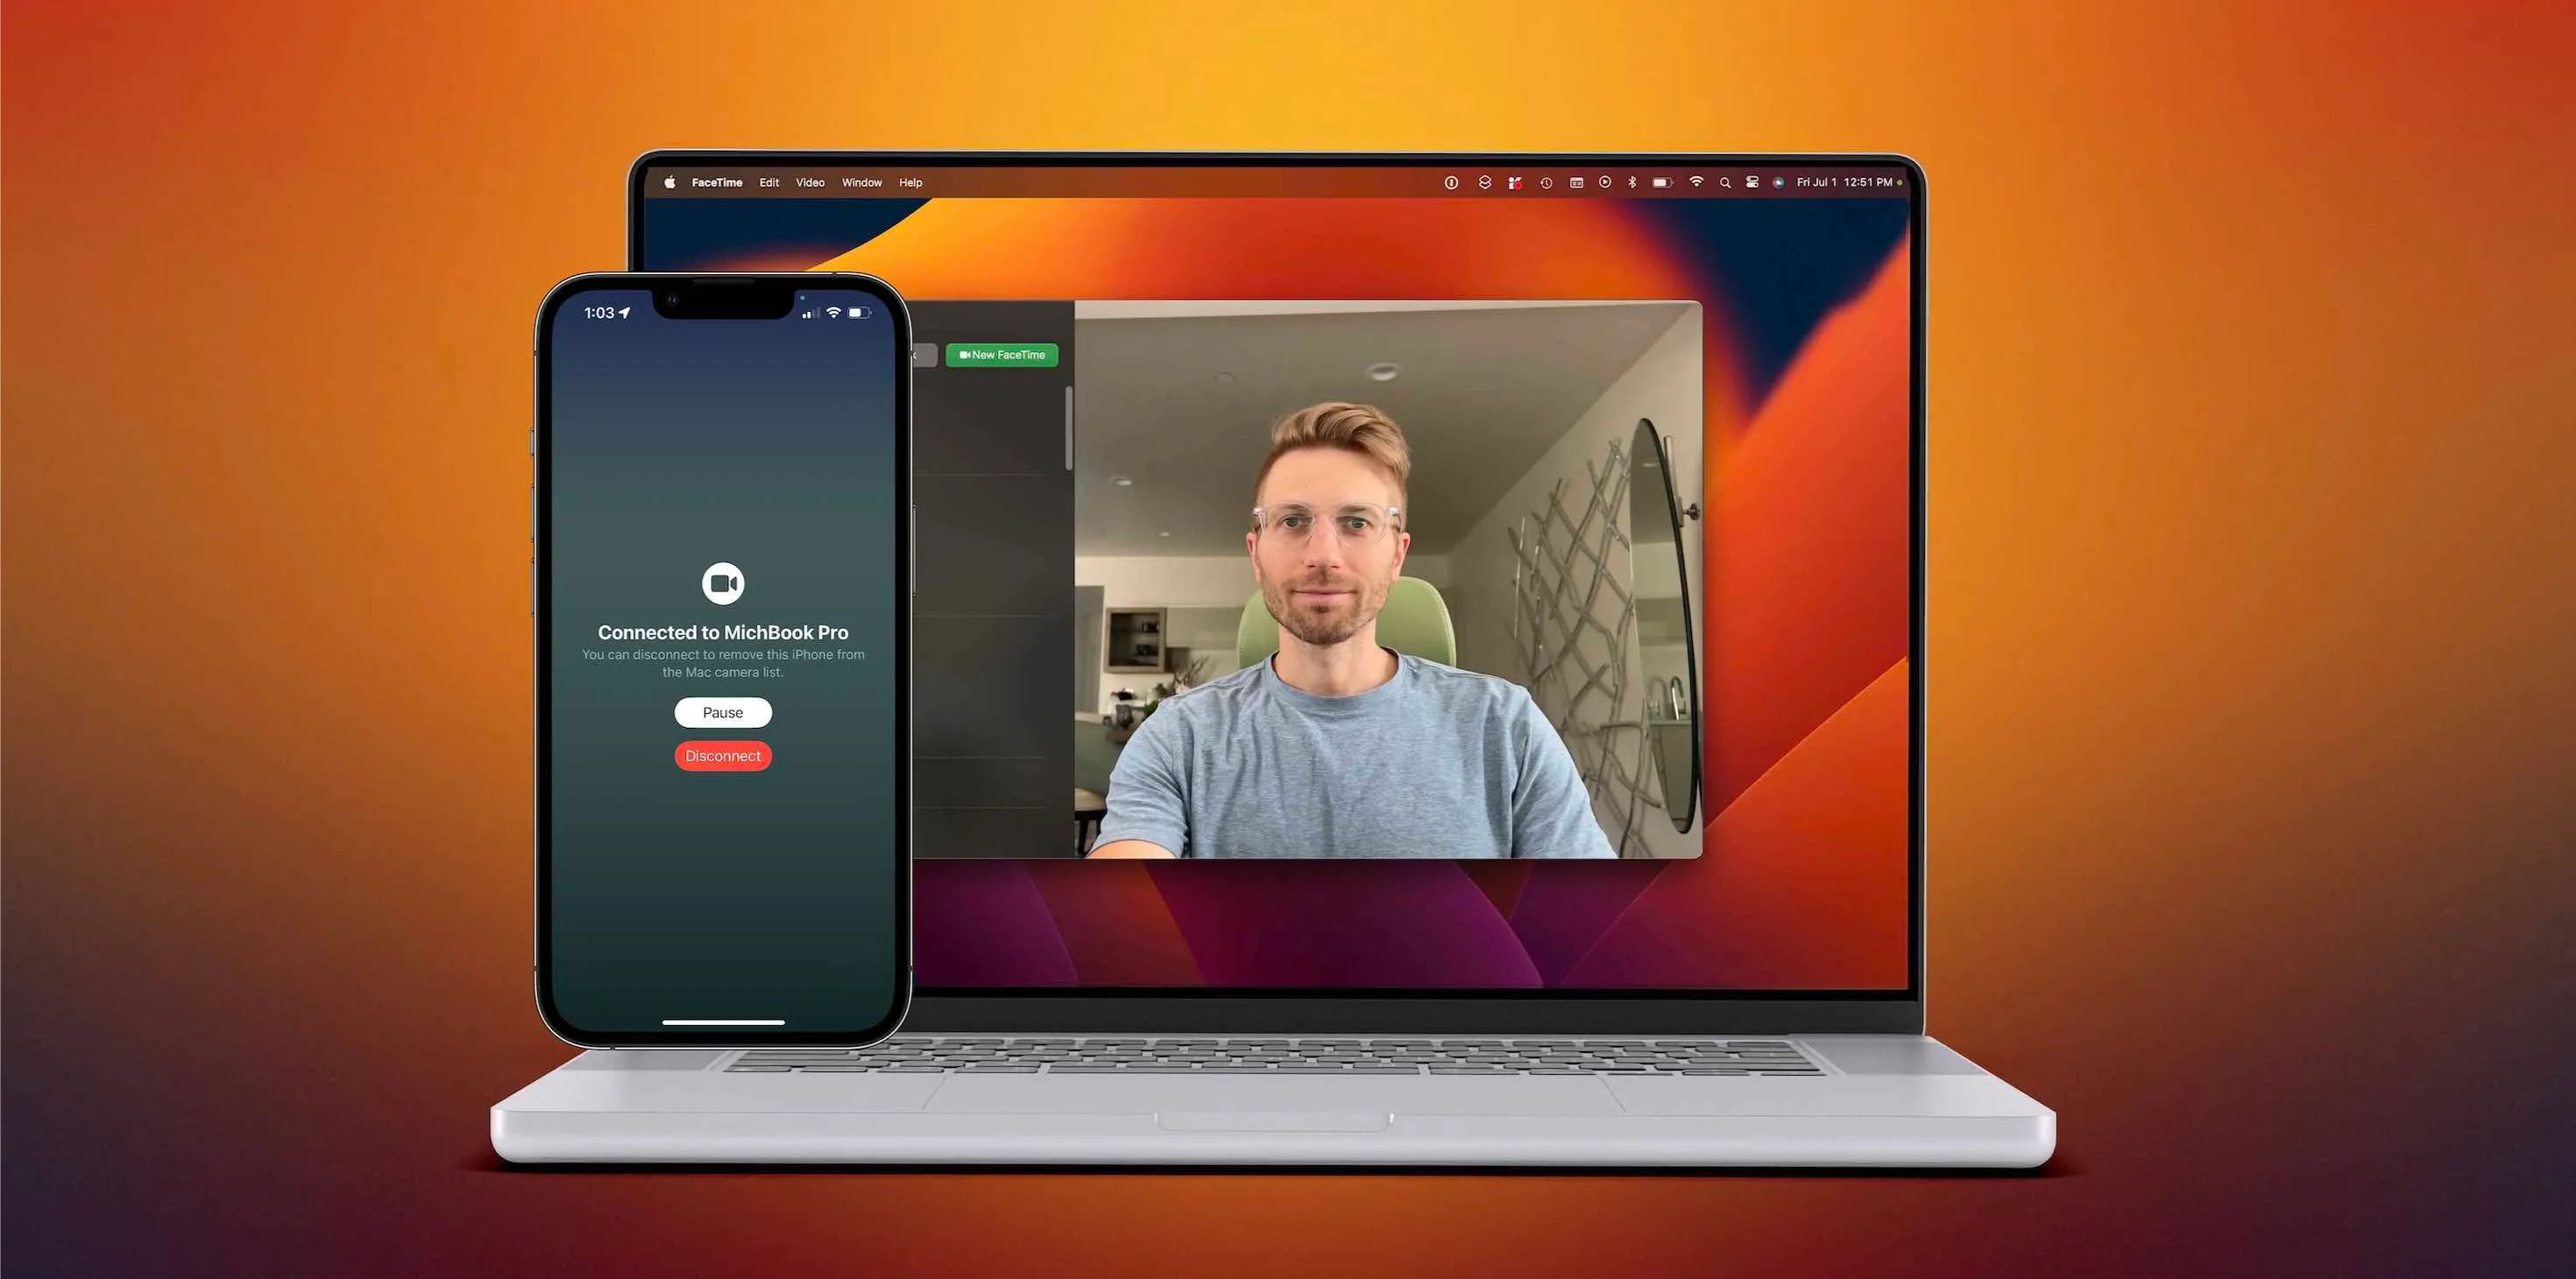 How To Change Webcam Settings On Mac